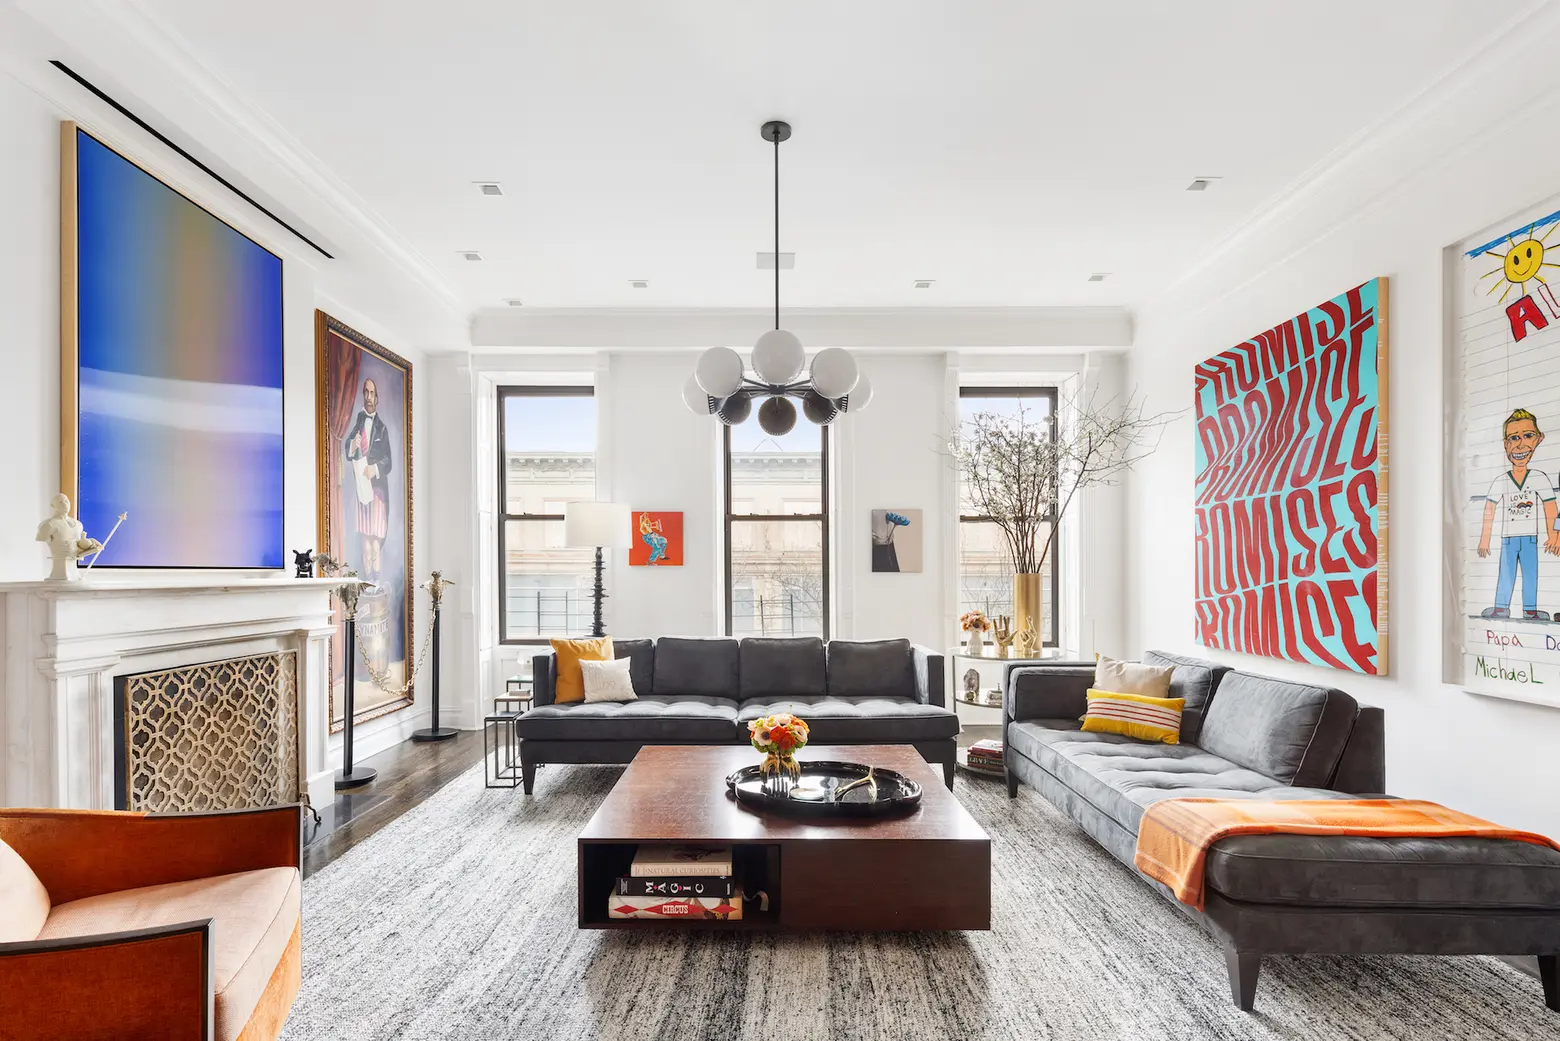 Neil Patrick Harris and David Burtka list their five-story Harlem townhouse for $7.3M